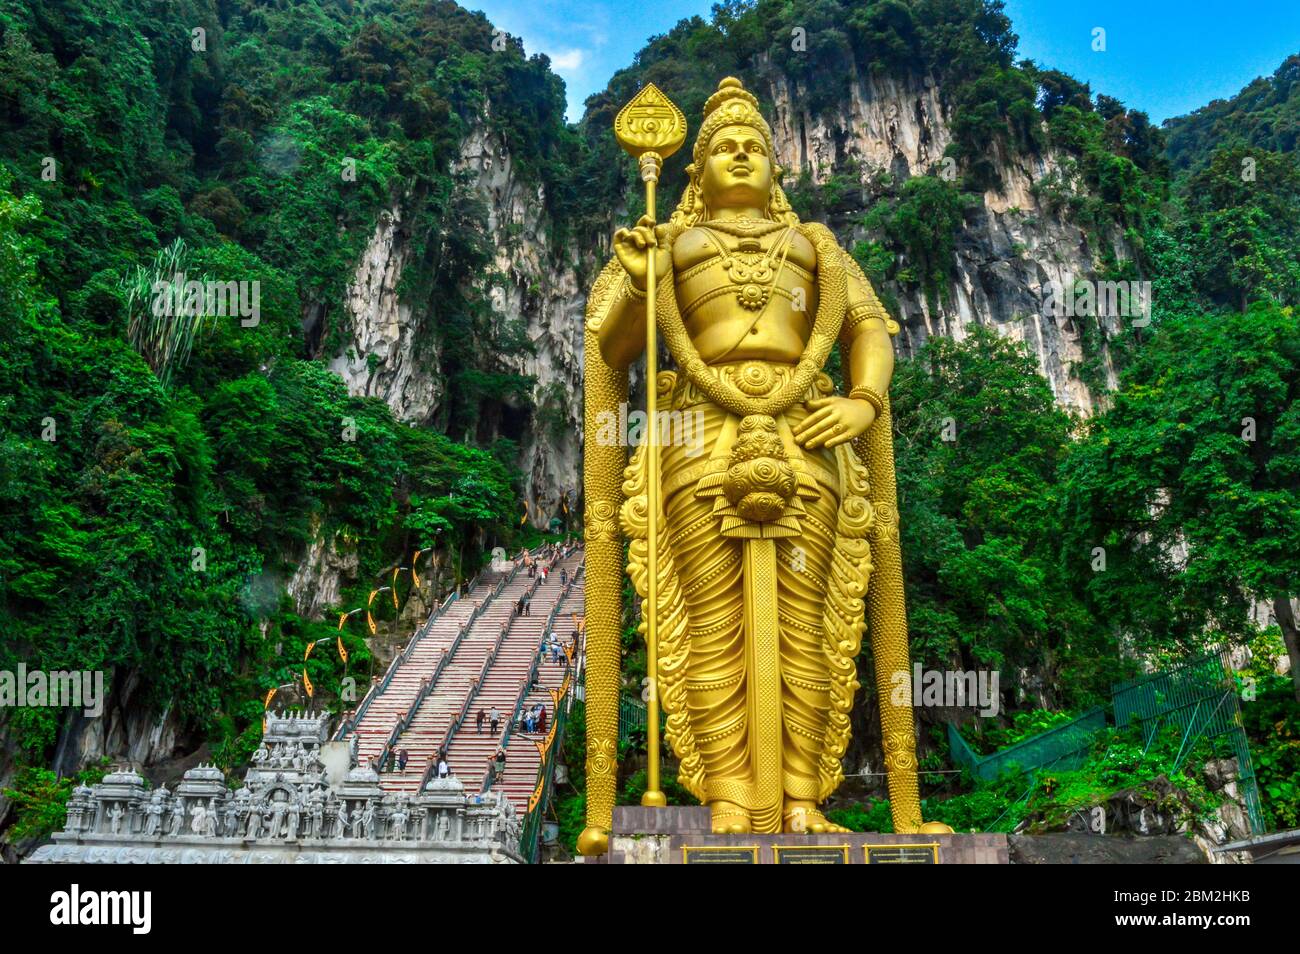 Lord Murugan Statue is the tallest statue of a Hindu deity in Malaysia. Travel in Malaysia. Hindu statue in Malaysia. Popular in world - Image Stock Photo